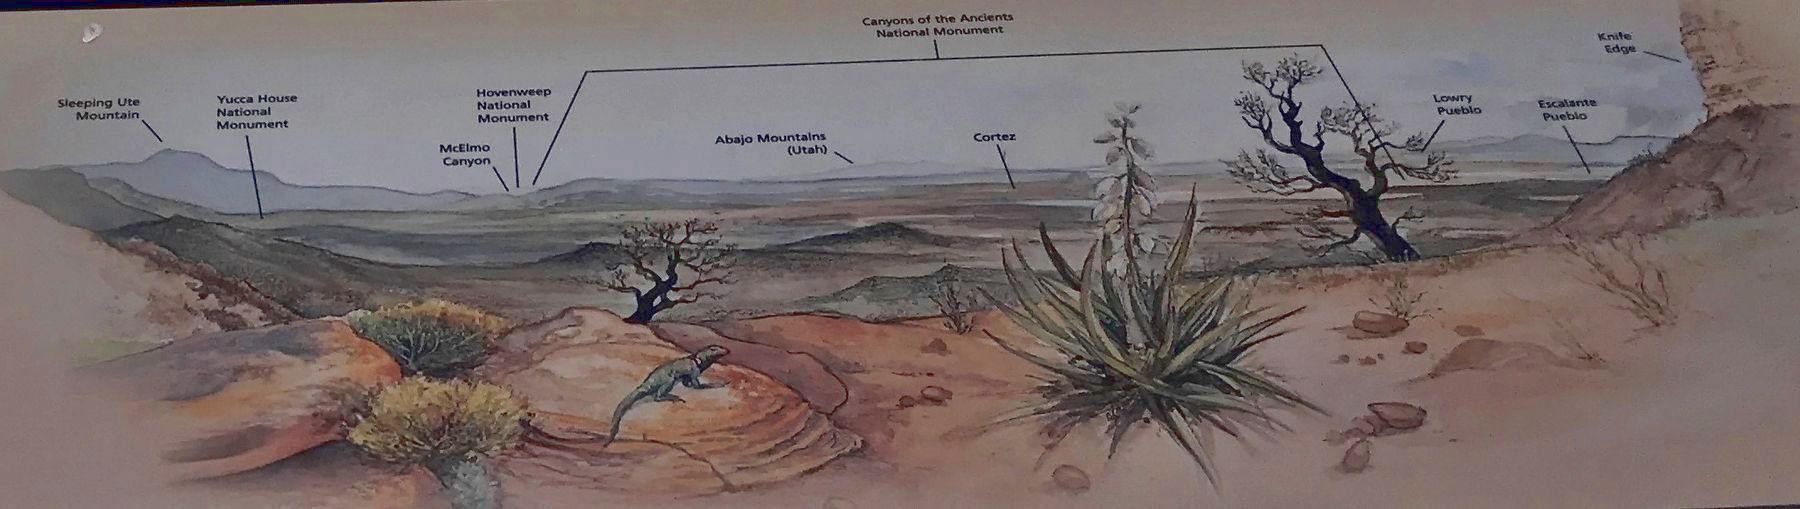 Montezuma Valley Marker Detail image. Click for full size.